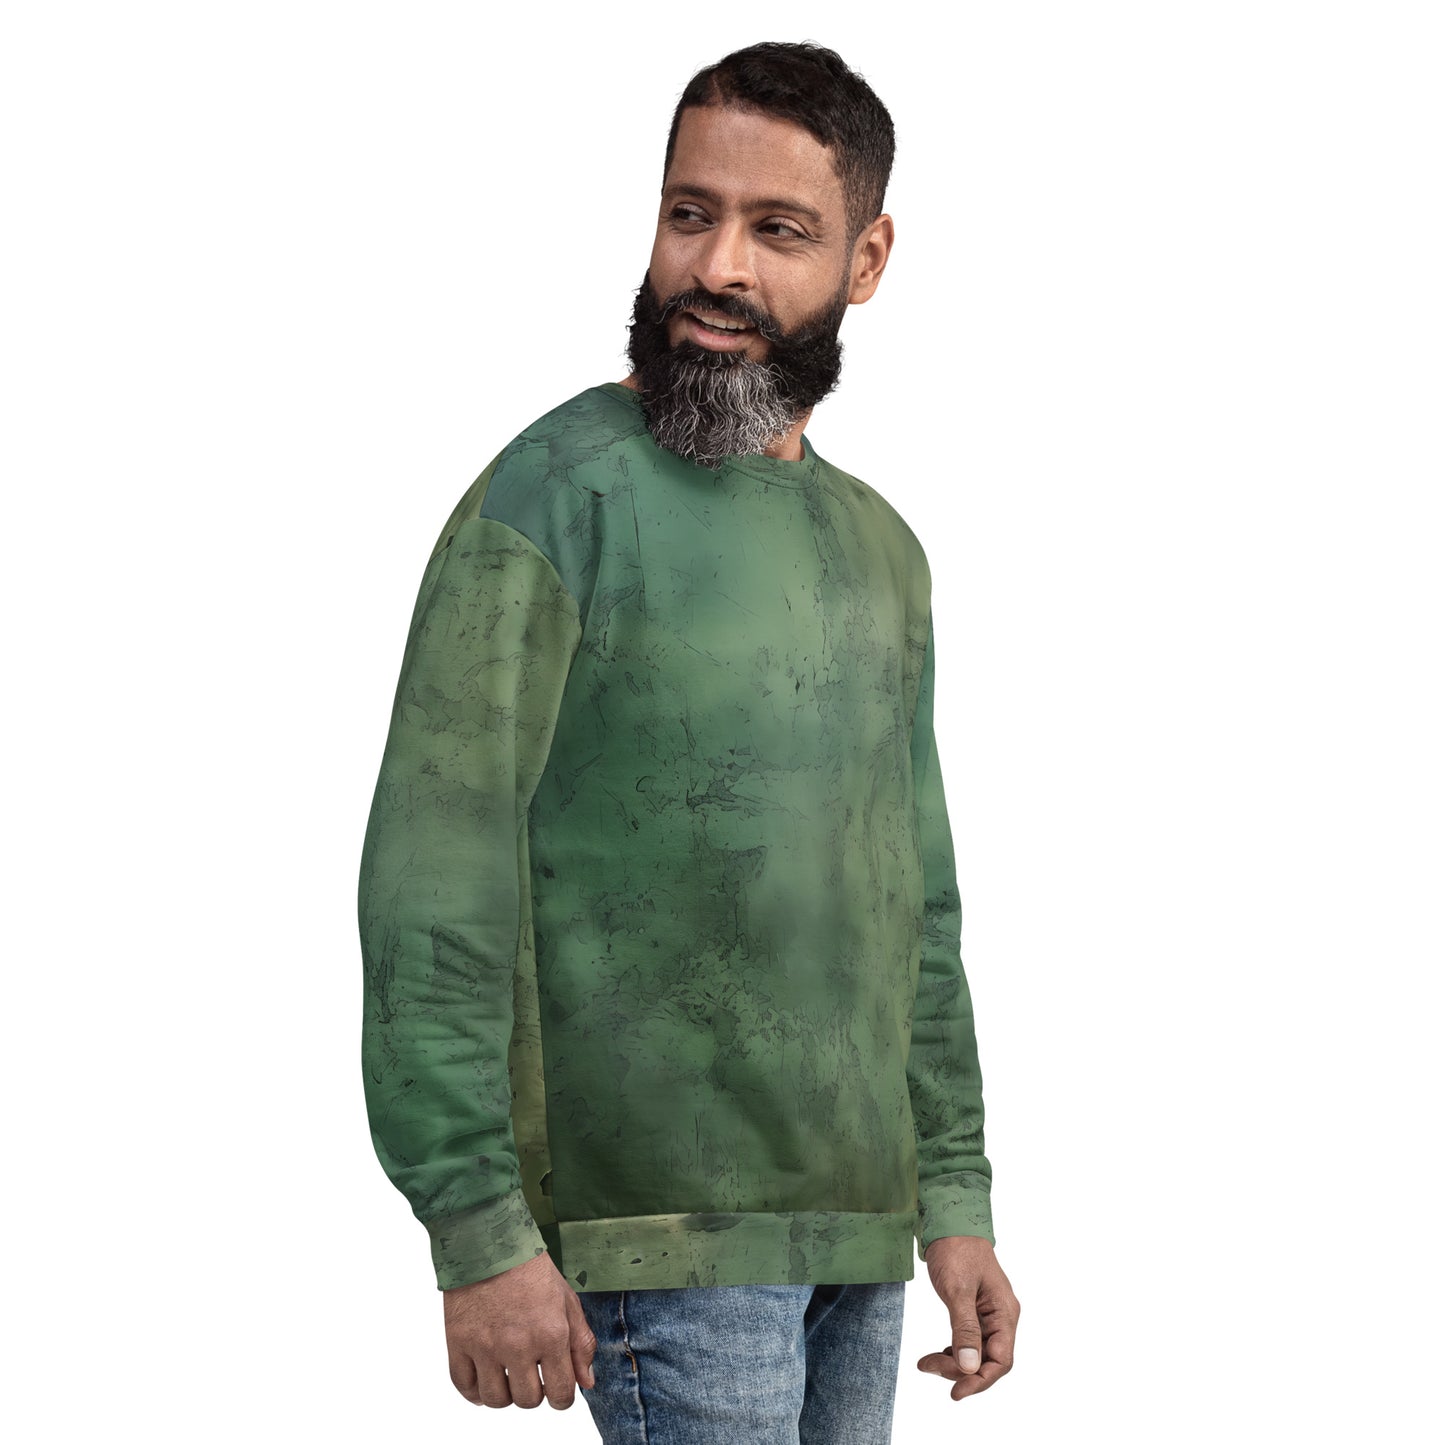 Unisex Green Sweater